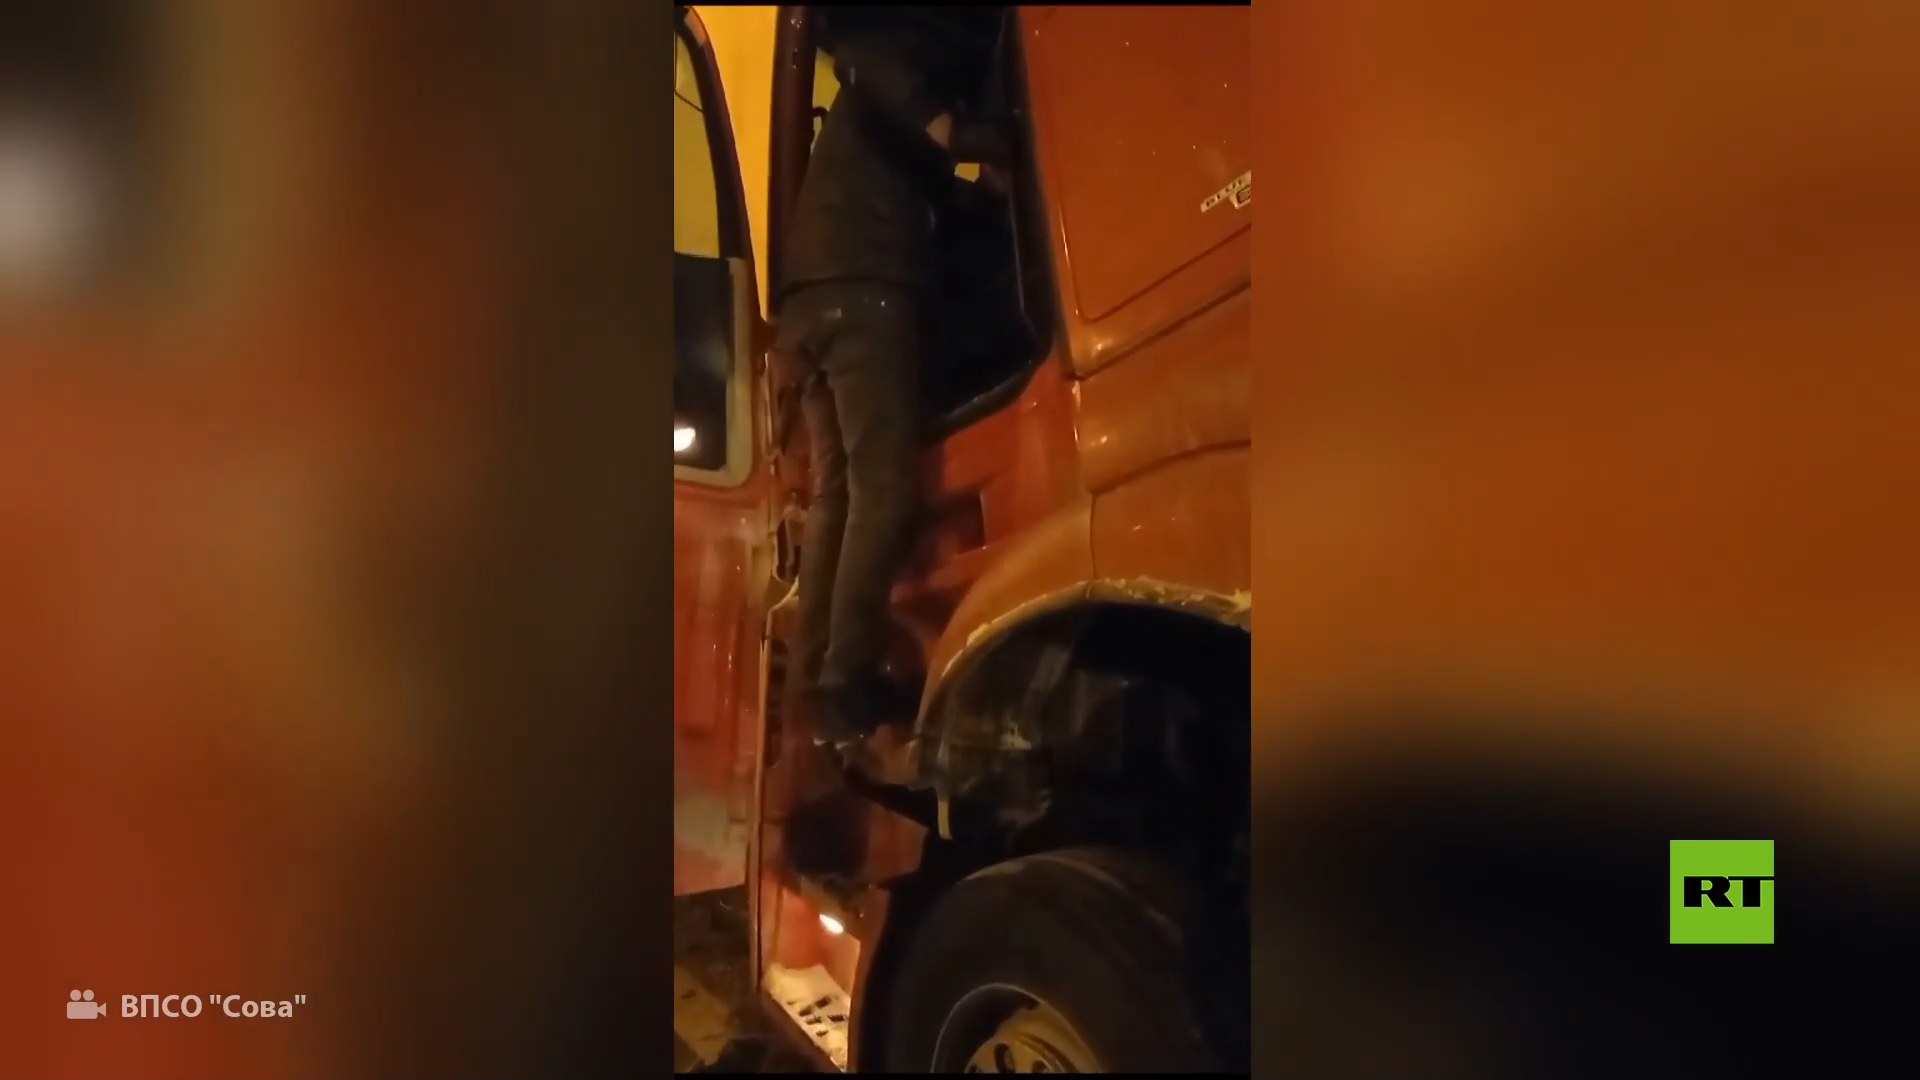 متطوعون روس ينقذون سائقي شاحنتين إيرانيين علقا وسط البرد الشديد